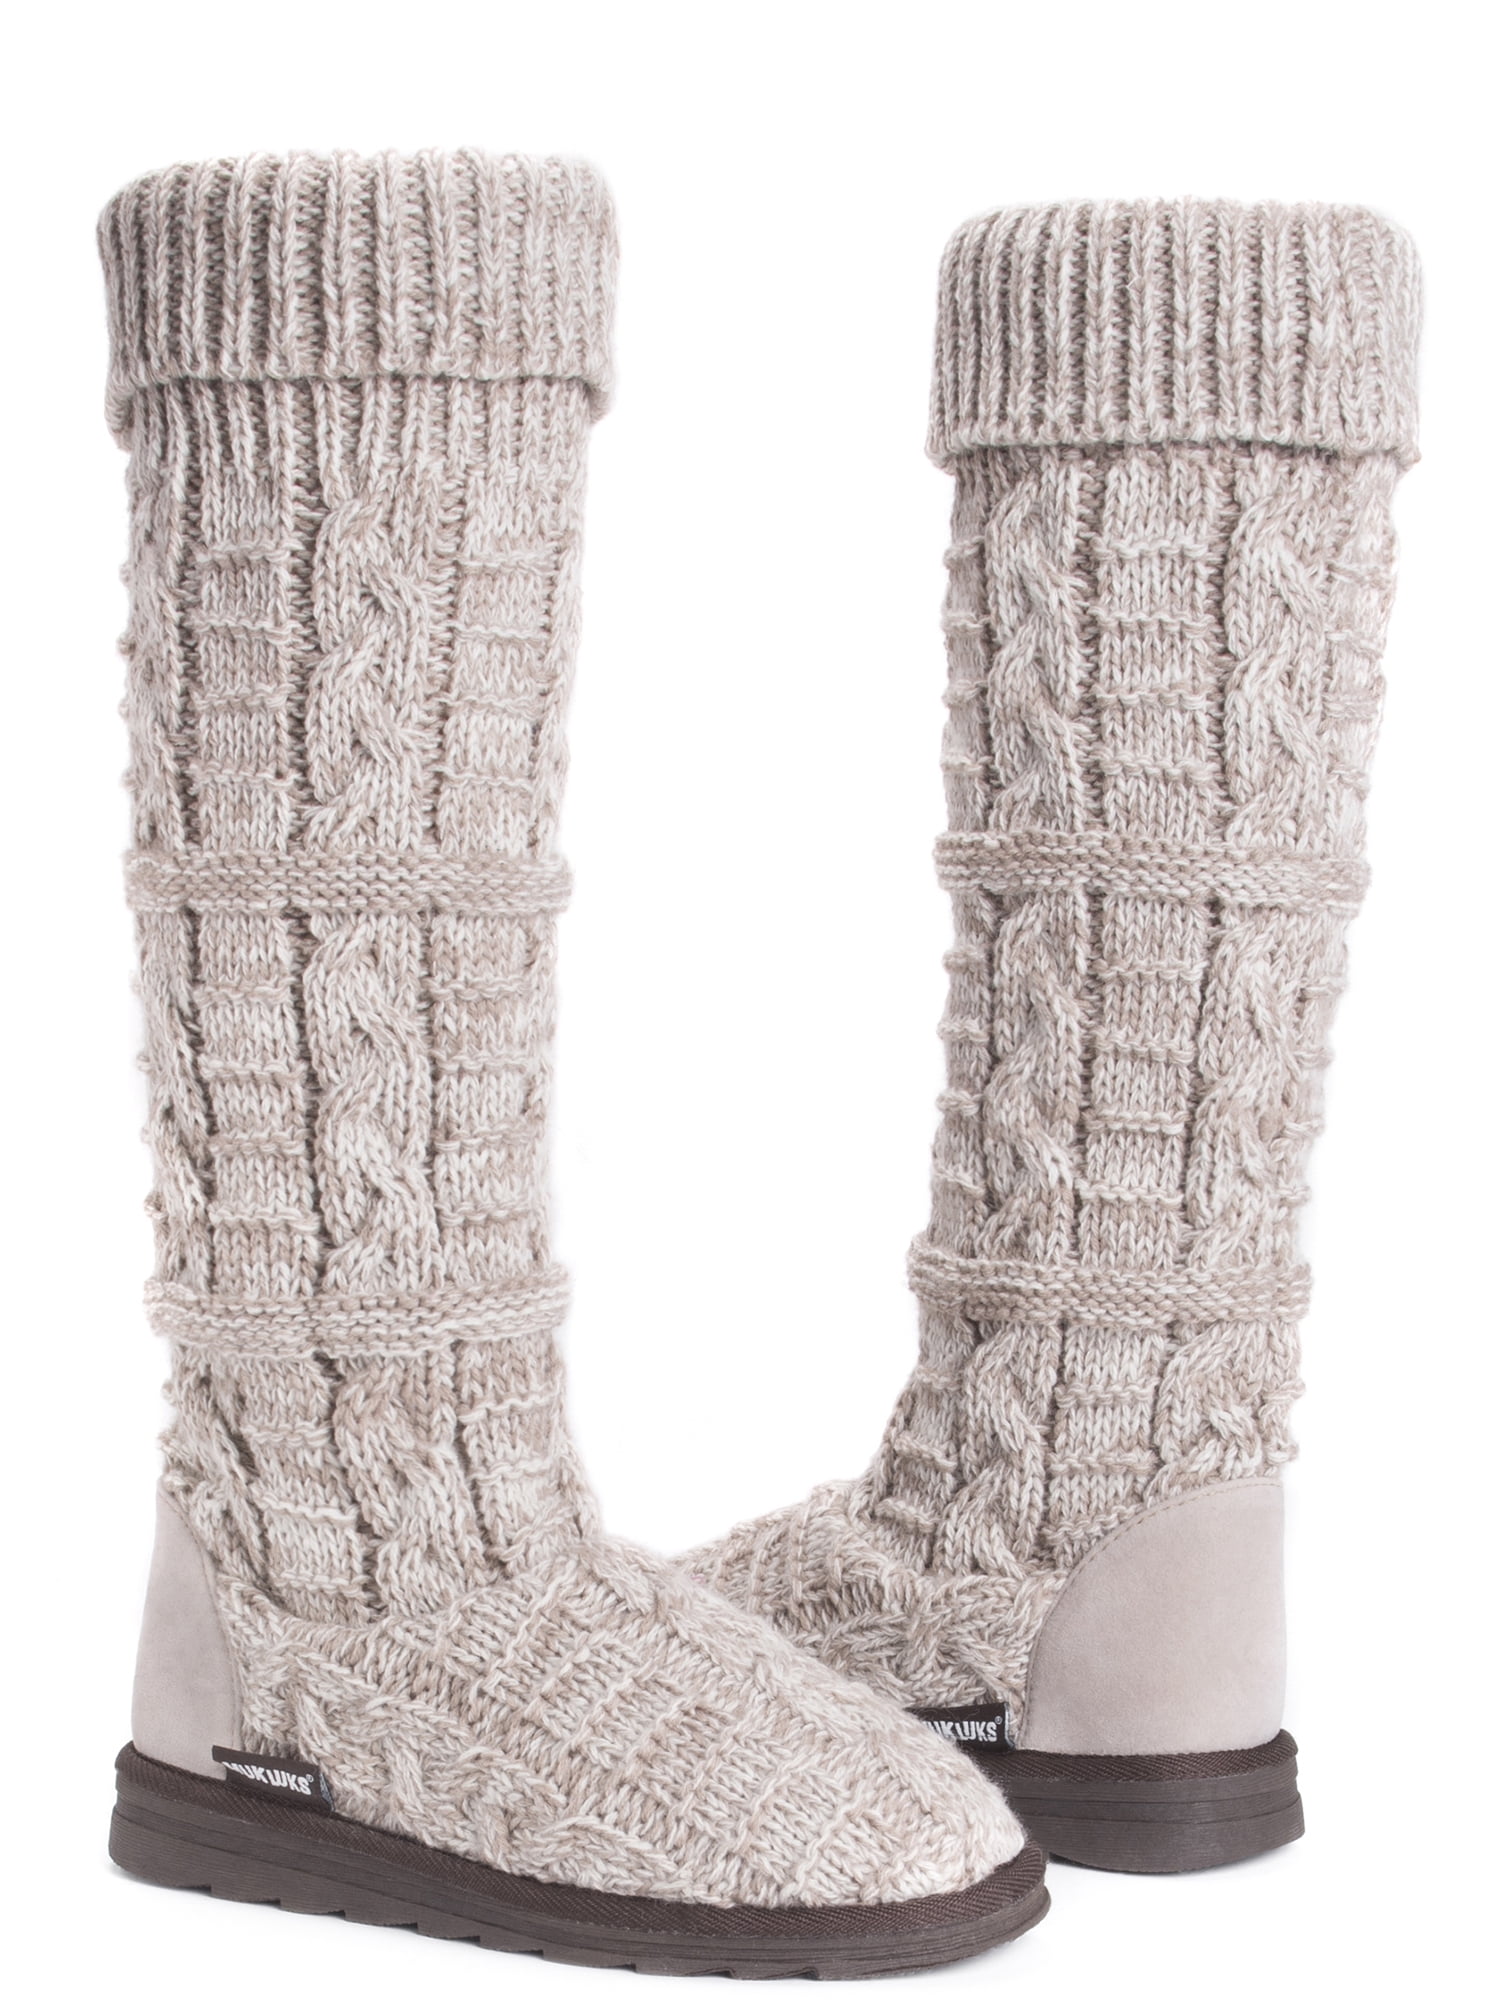 Boot (Women\'s) Slouch Shelly Sweater Marl Knit Luks Muk